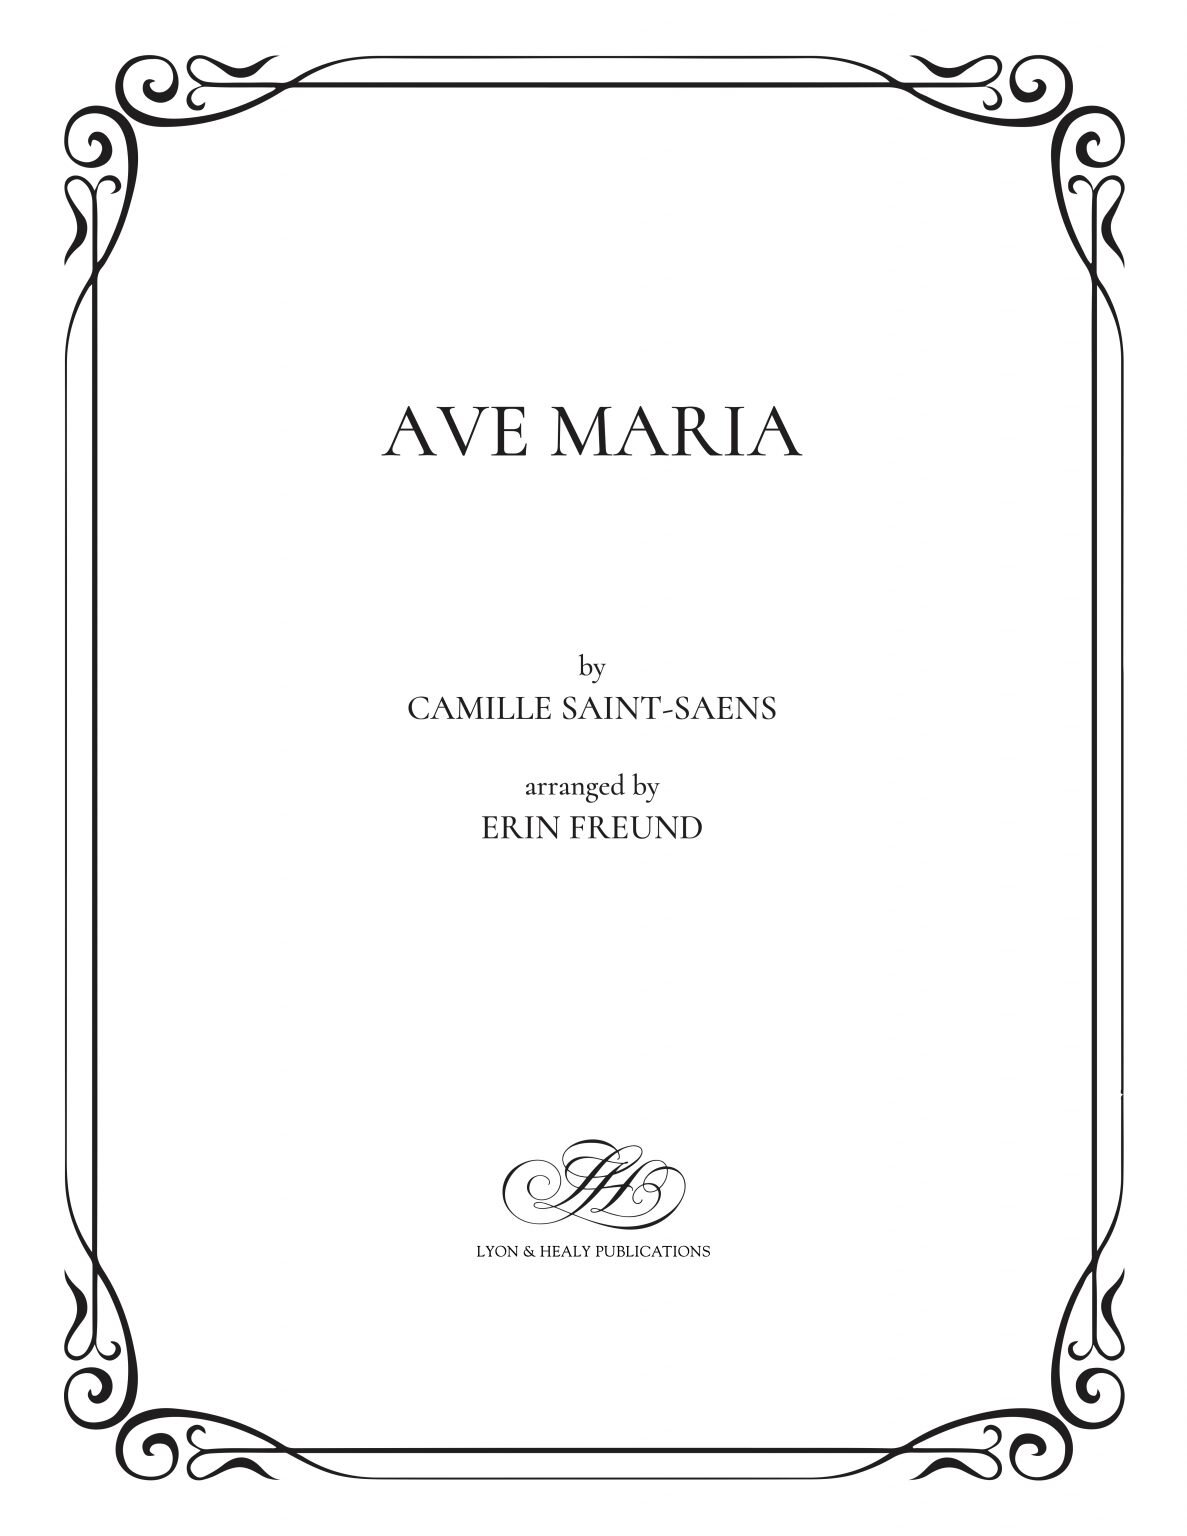 Ave Maria cover.jpg